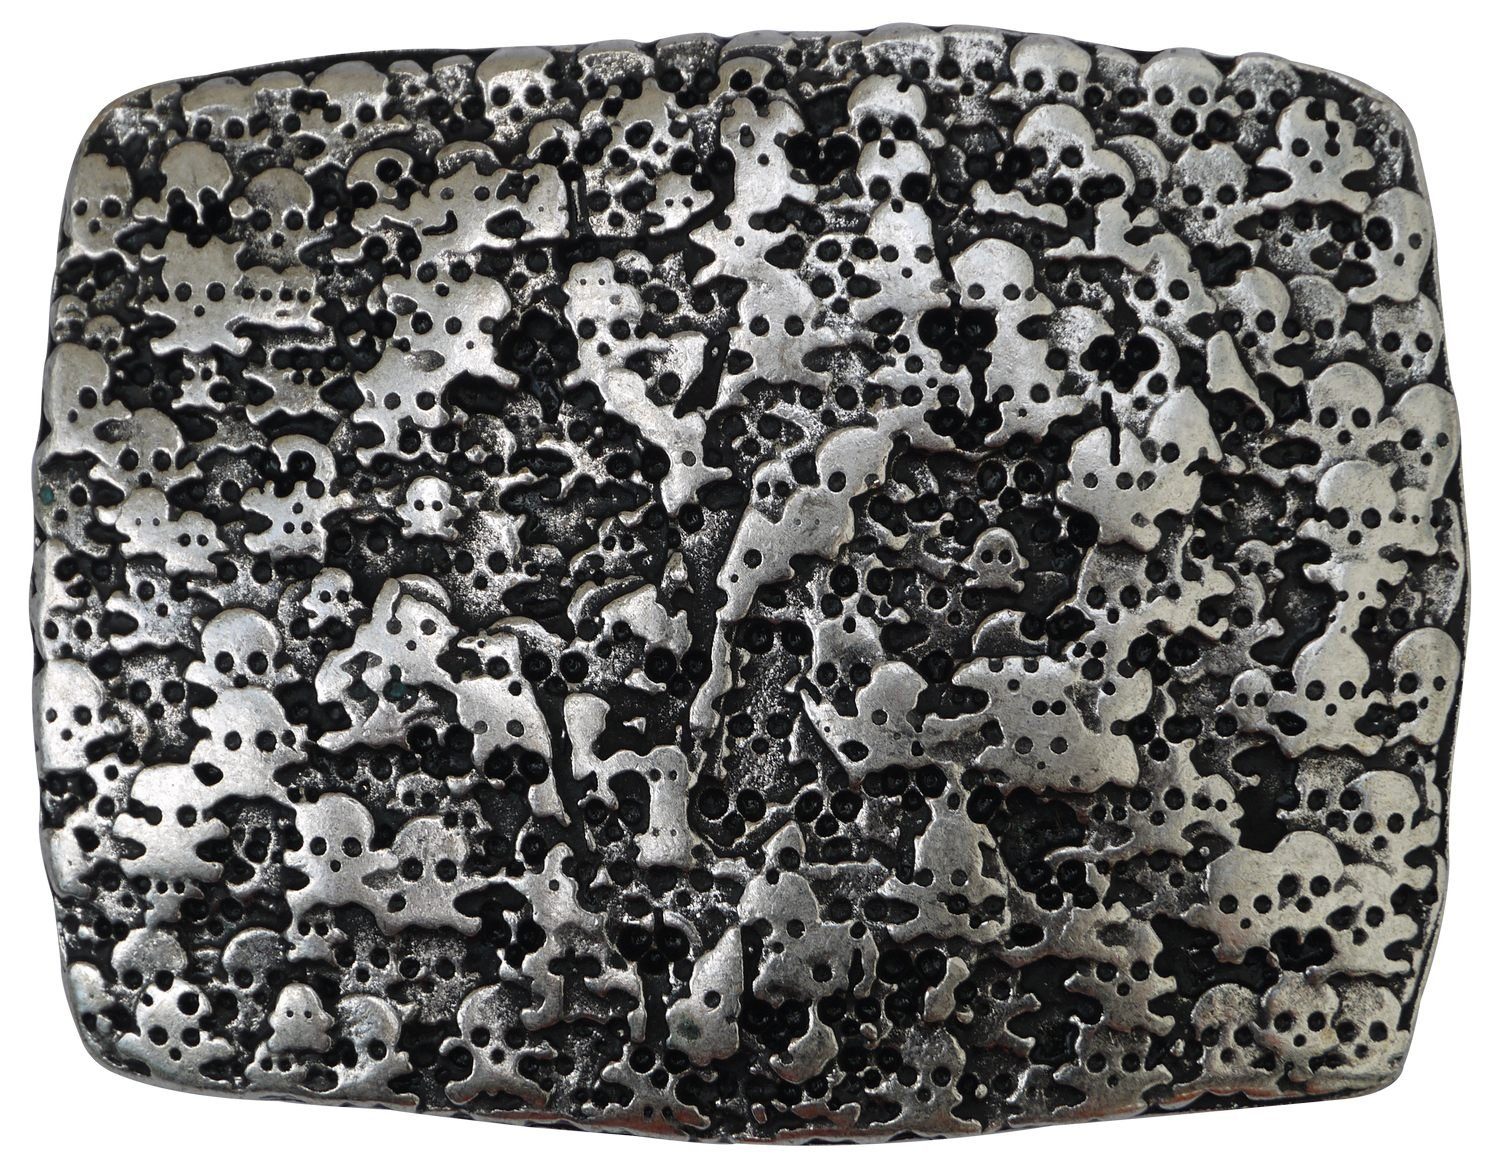 FRONHOFER Gürtelschnalle 18119 Große Gürtelschnalle altsilber, kleine Totenköpfe, Skull Buckle, 4 cm | Anzuggürtel